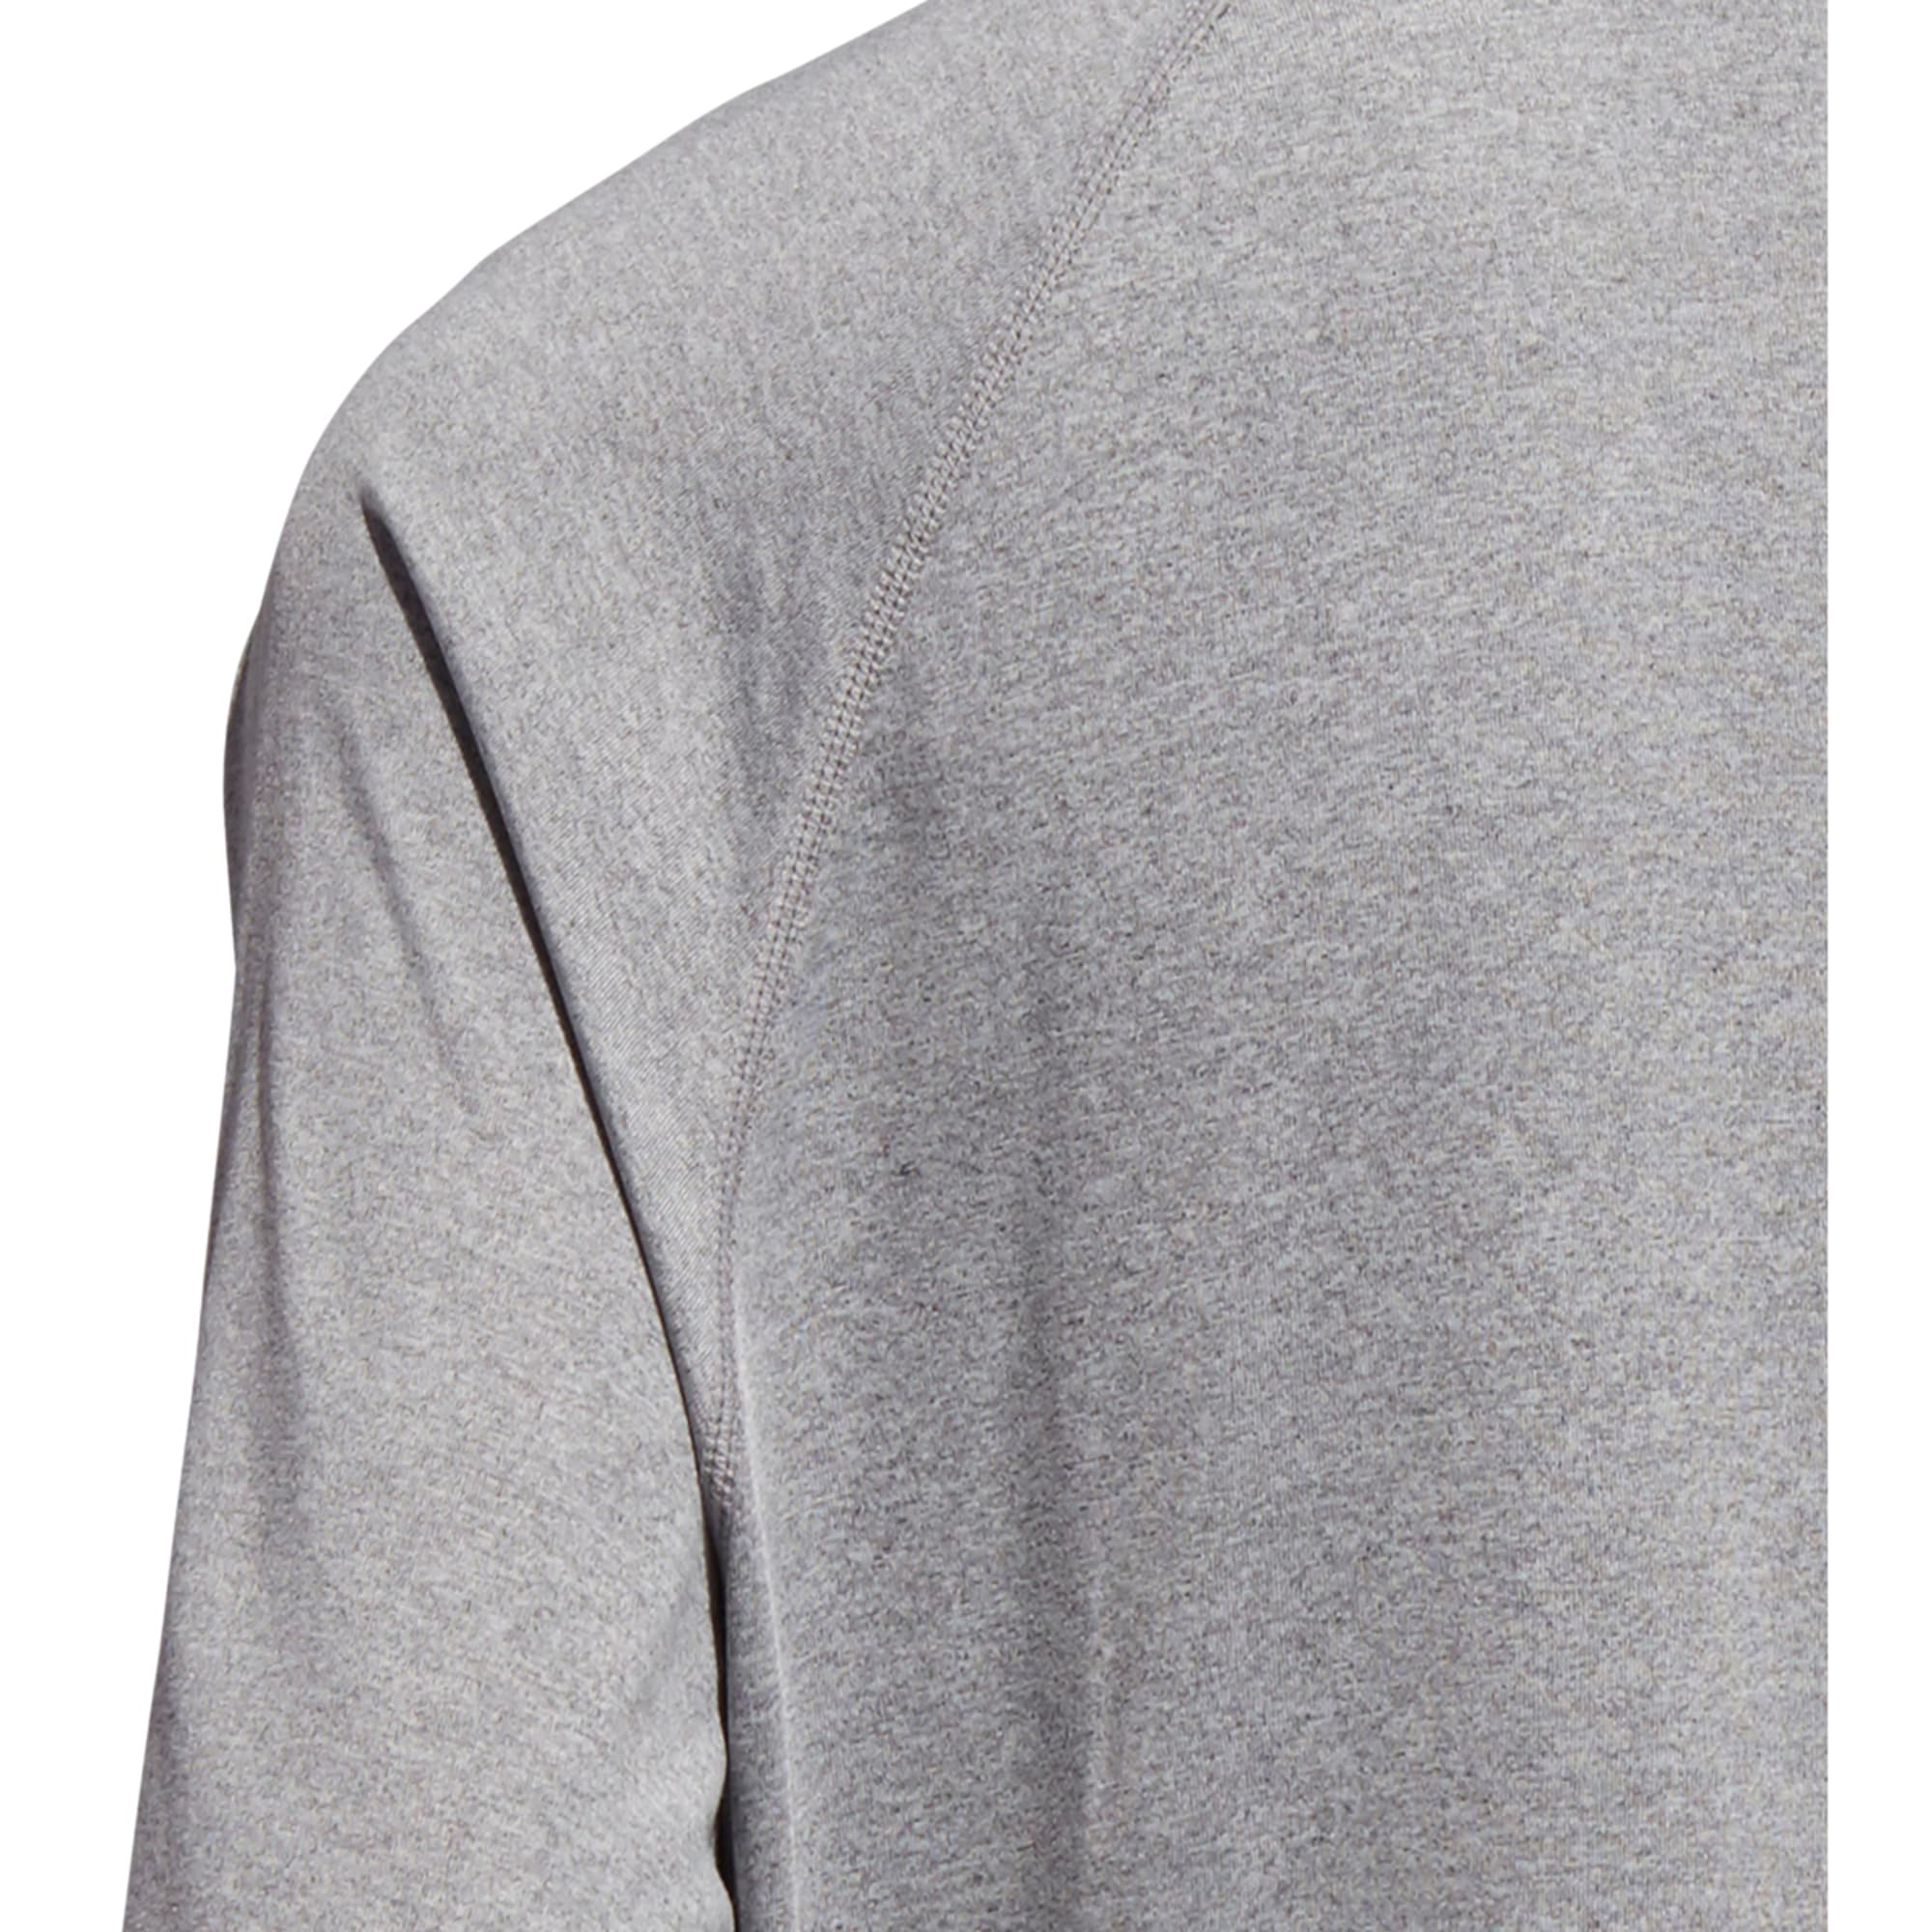 New Bradley Braves Mens Sizes S-M-L-XL-2XL Climalite Long Sleeve Adidas  Shirt